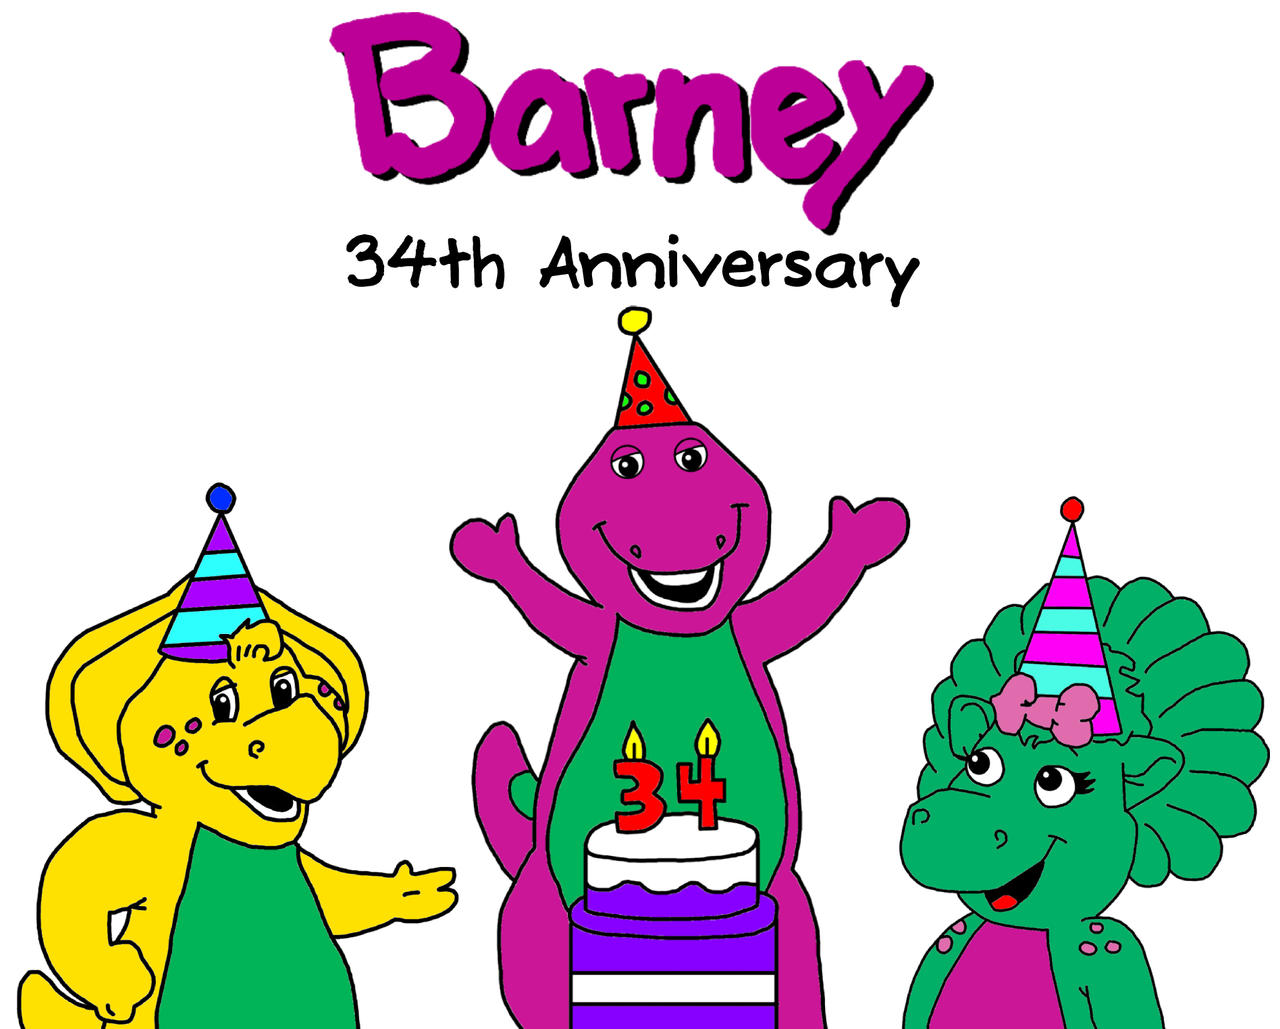 Barney - 34th Anniversary by NicholasVinhChauLe on DeviantArt